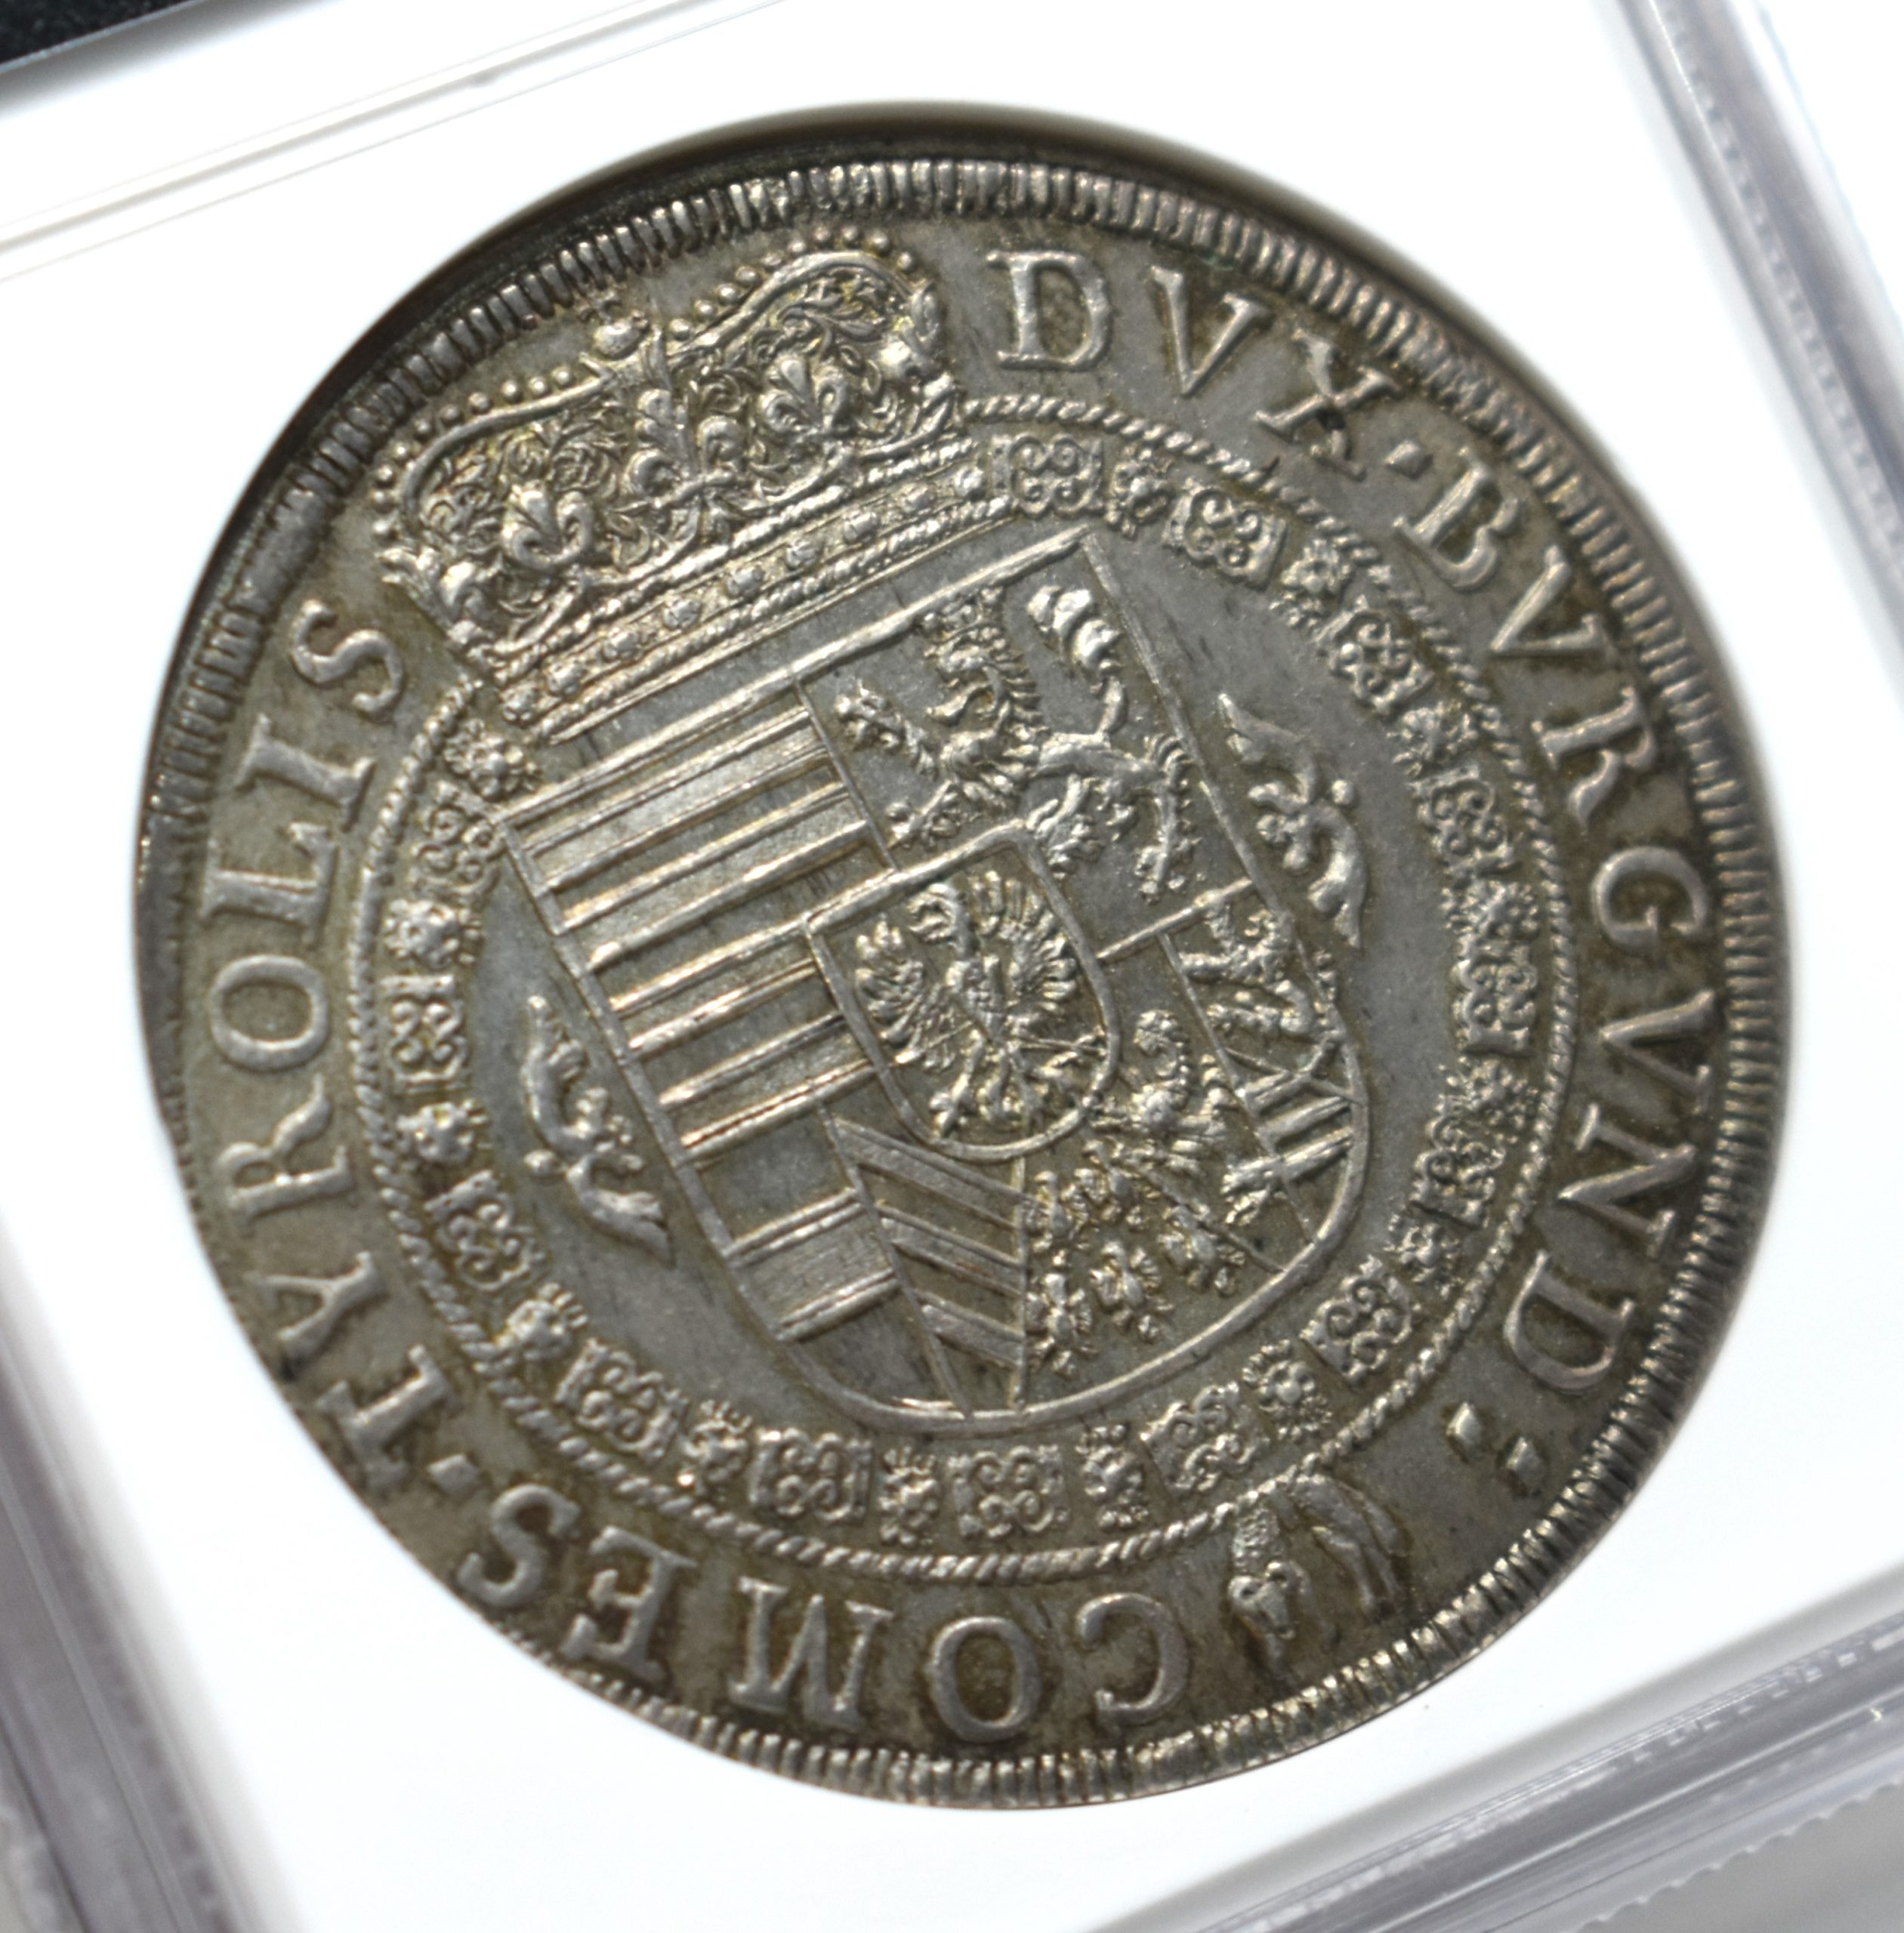 Sold】神聖ローマ帝国 1632年 レオポルト5世 ターラー MS66 NGC 